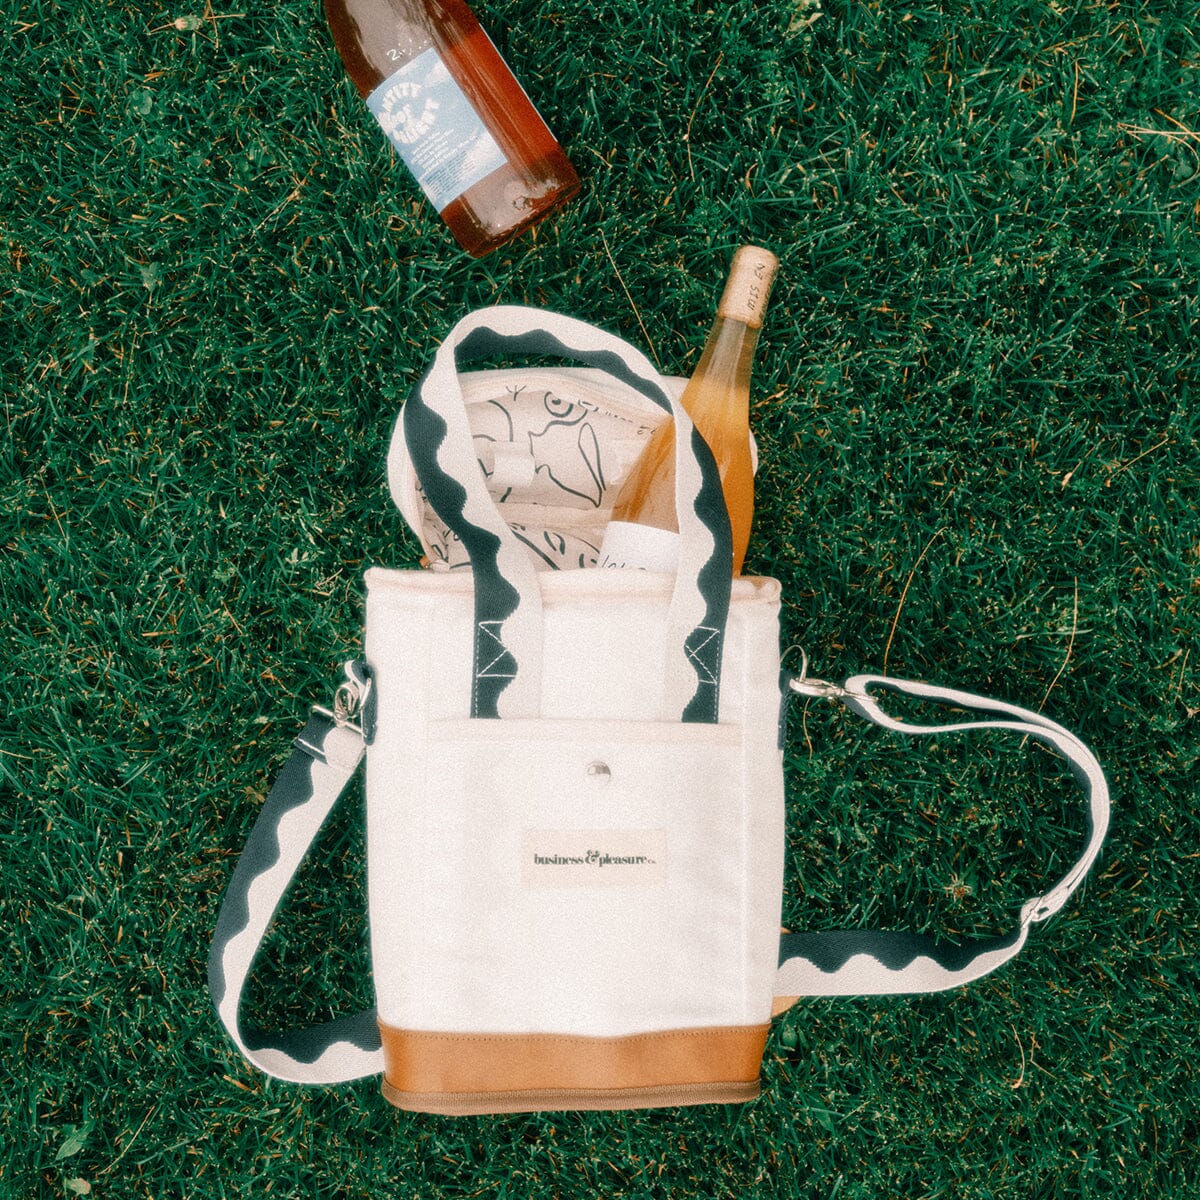 The Wine Cooler Tote Bag - Rivie White Wine Cooler Tote Bag Business & Pleasure Co 